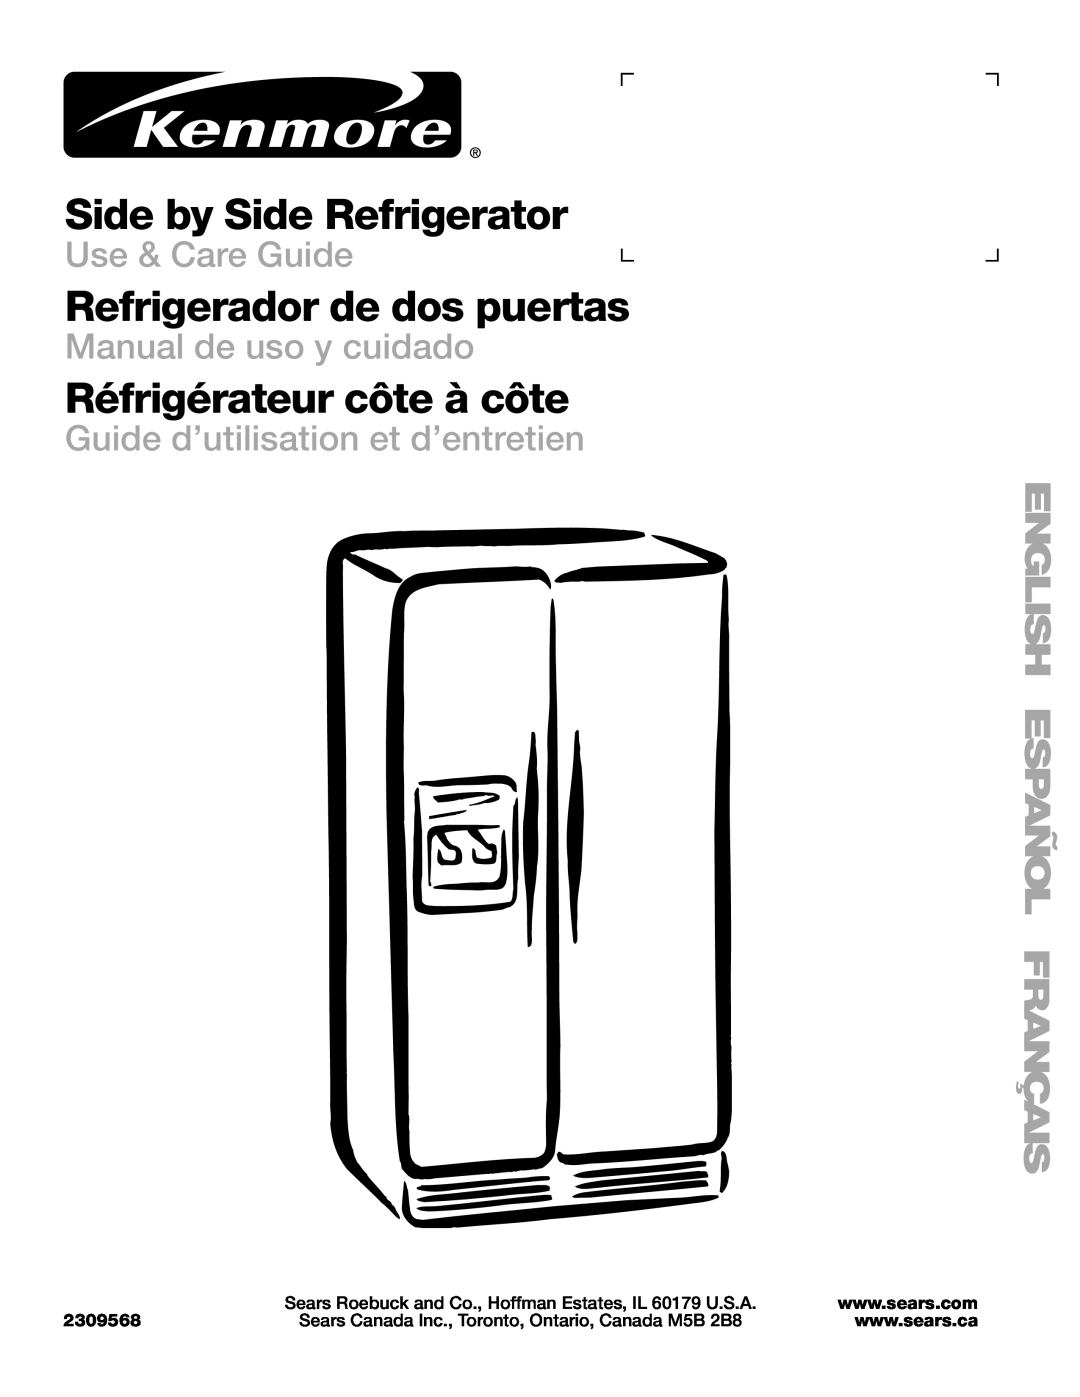 Sears T1KB2/T1RFKB2 manual 2309568, Side by Side Refrigerator, Refrigerador de dos puertas, Réfrigérateur côte à côte 